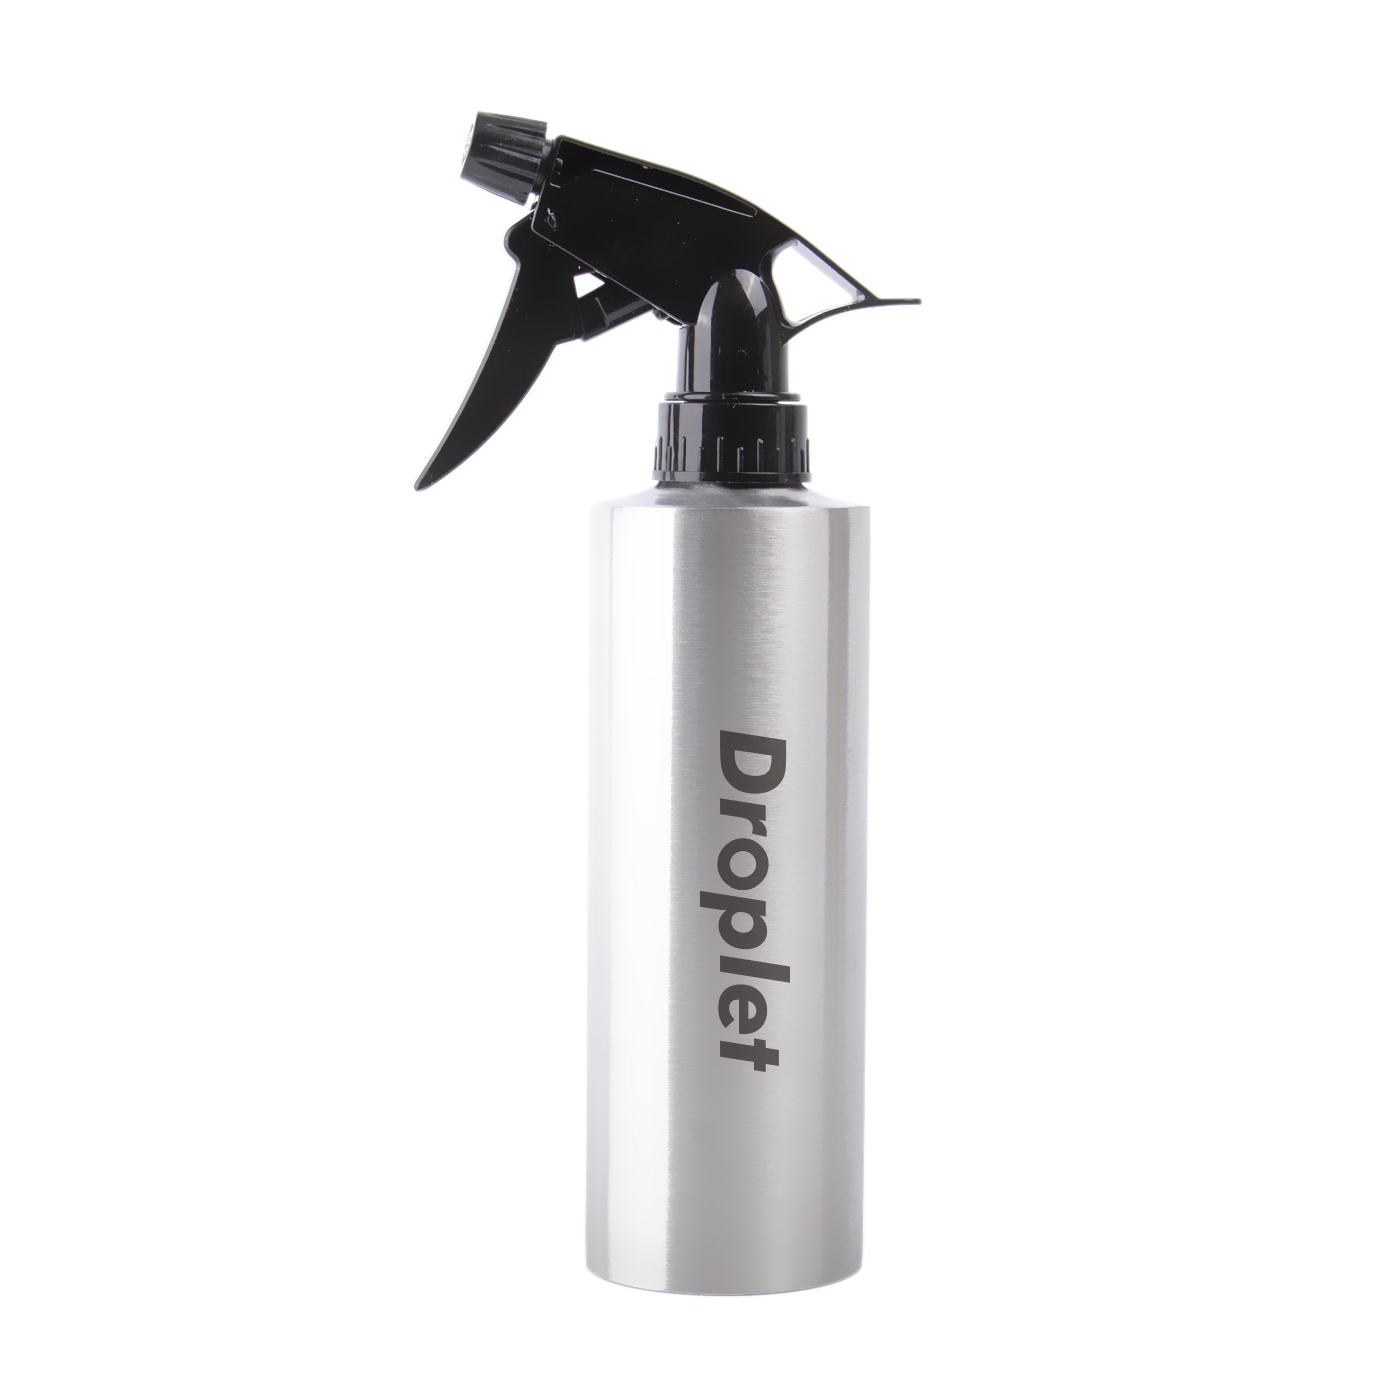 12 oz. Stainless Steel Spray Bottle With Trigger Sprayer